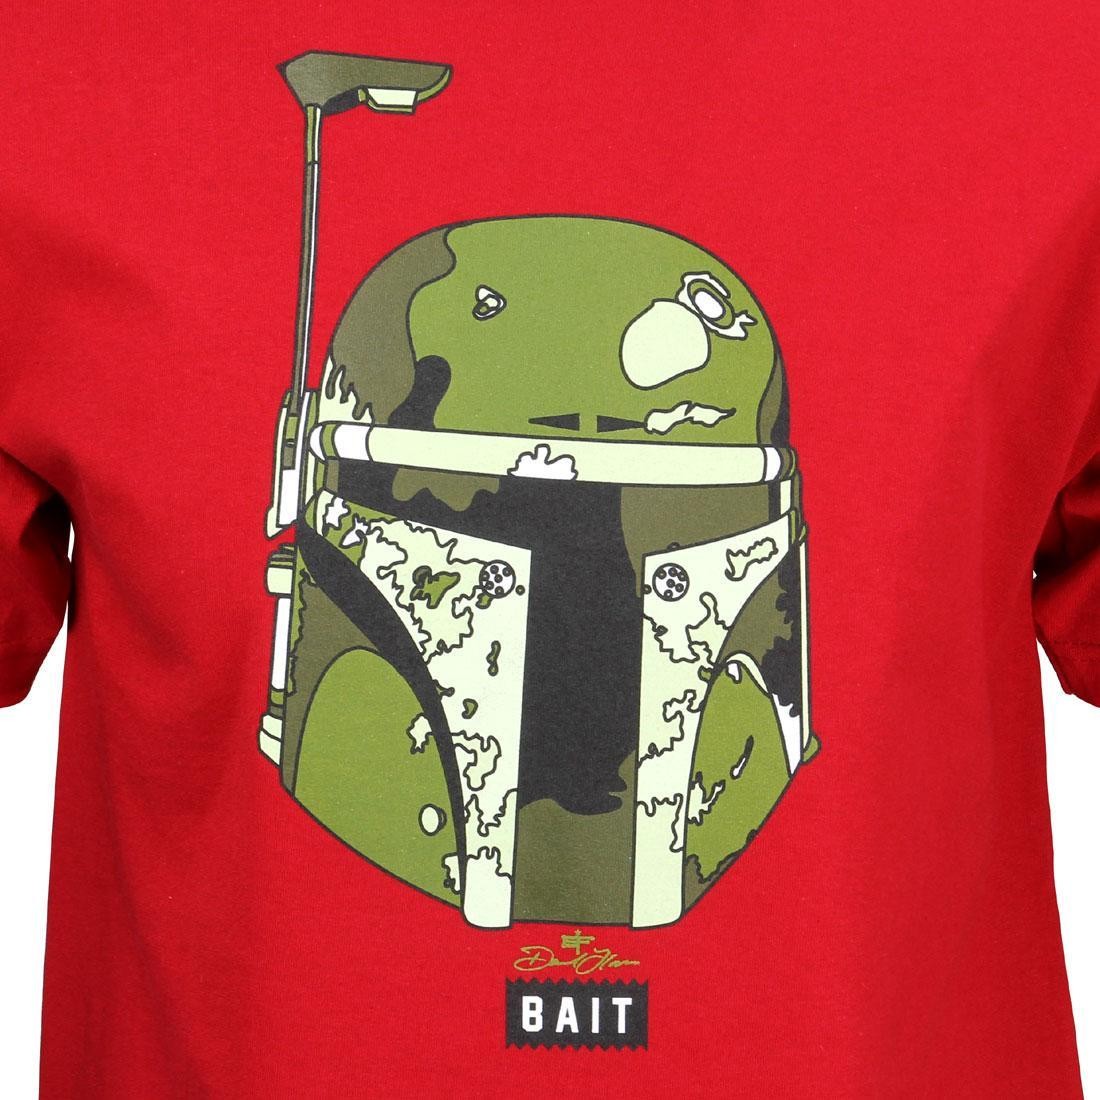 BAIT x David Flores Boba Fett T-Shirt - Boba Fett Collectibles